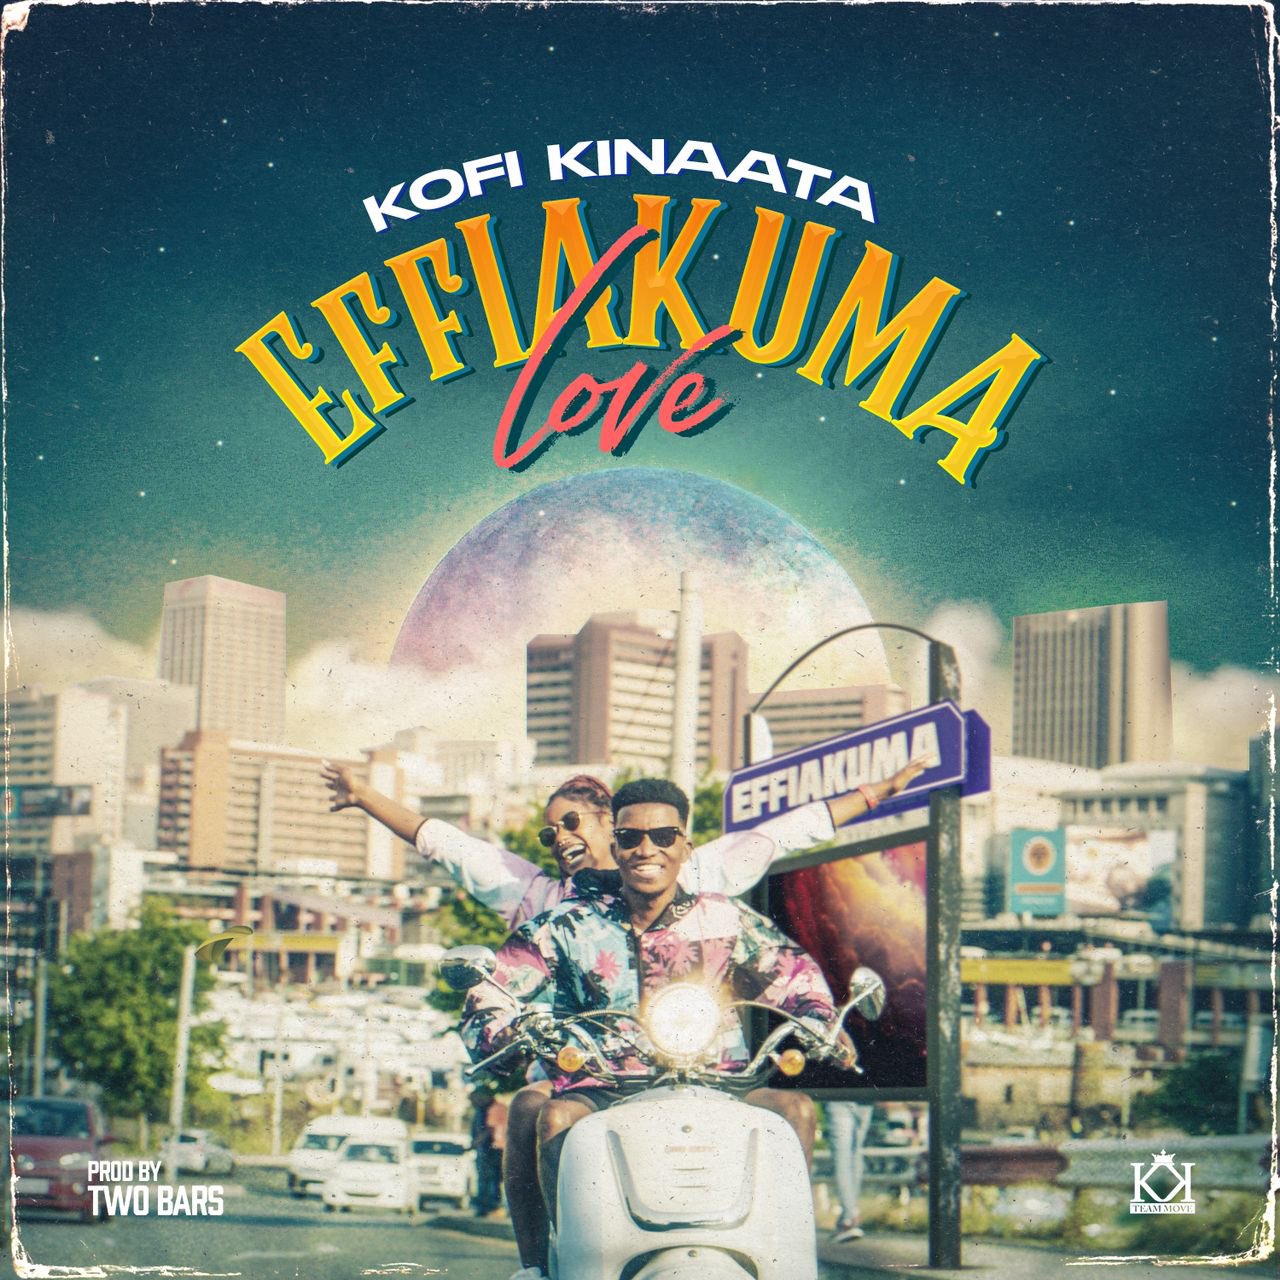 Kofi Kinaata - Effiakuma Love 8